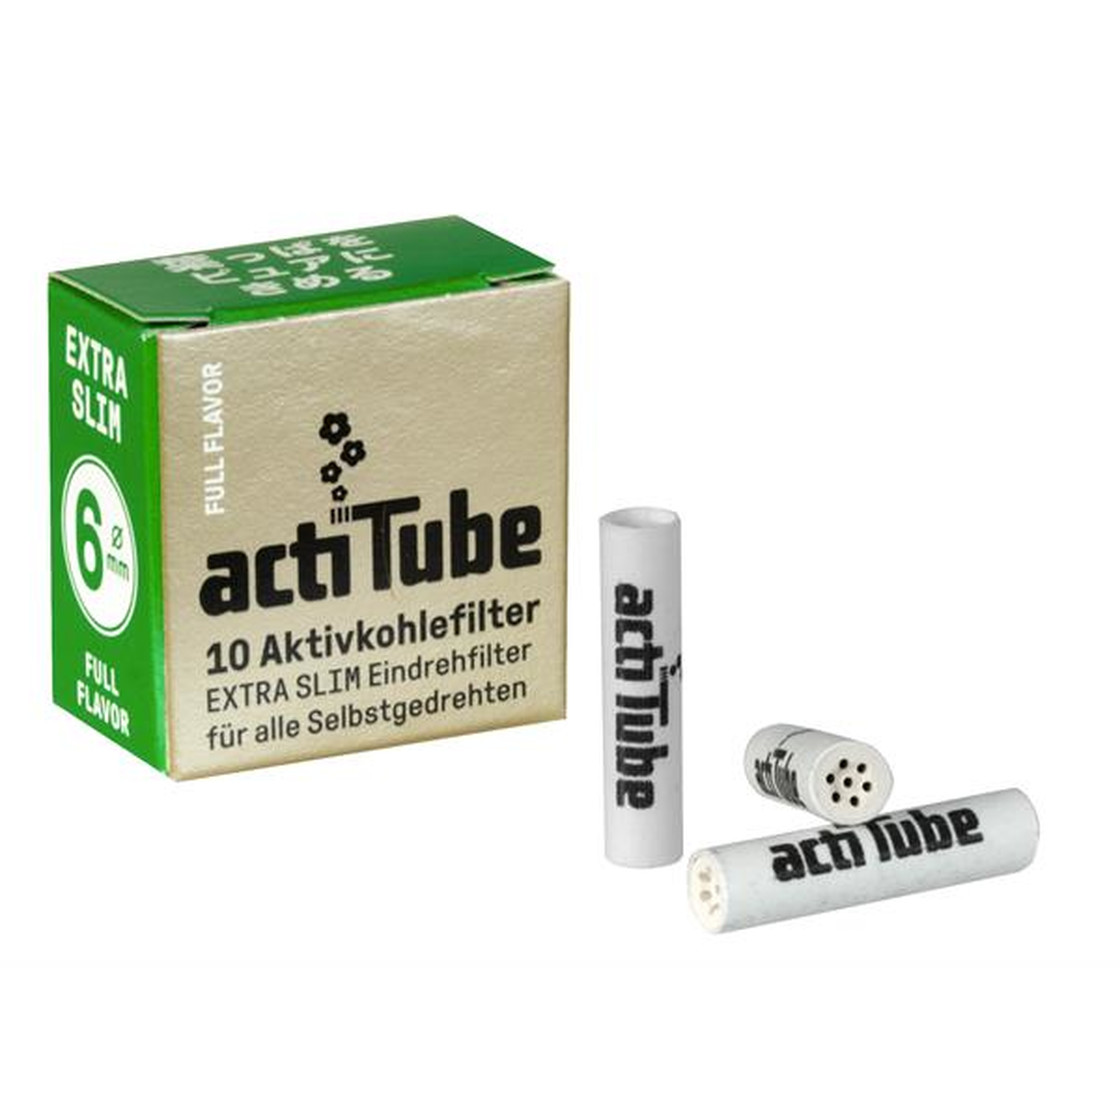 actitube-filterki-weglowe-z-weglem-aktywnym-6mm-50szt-cibidex-ulta-slim